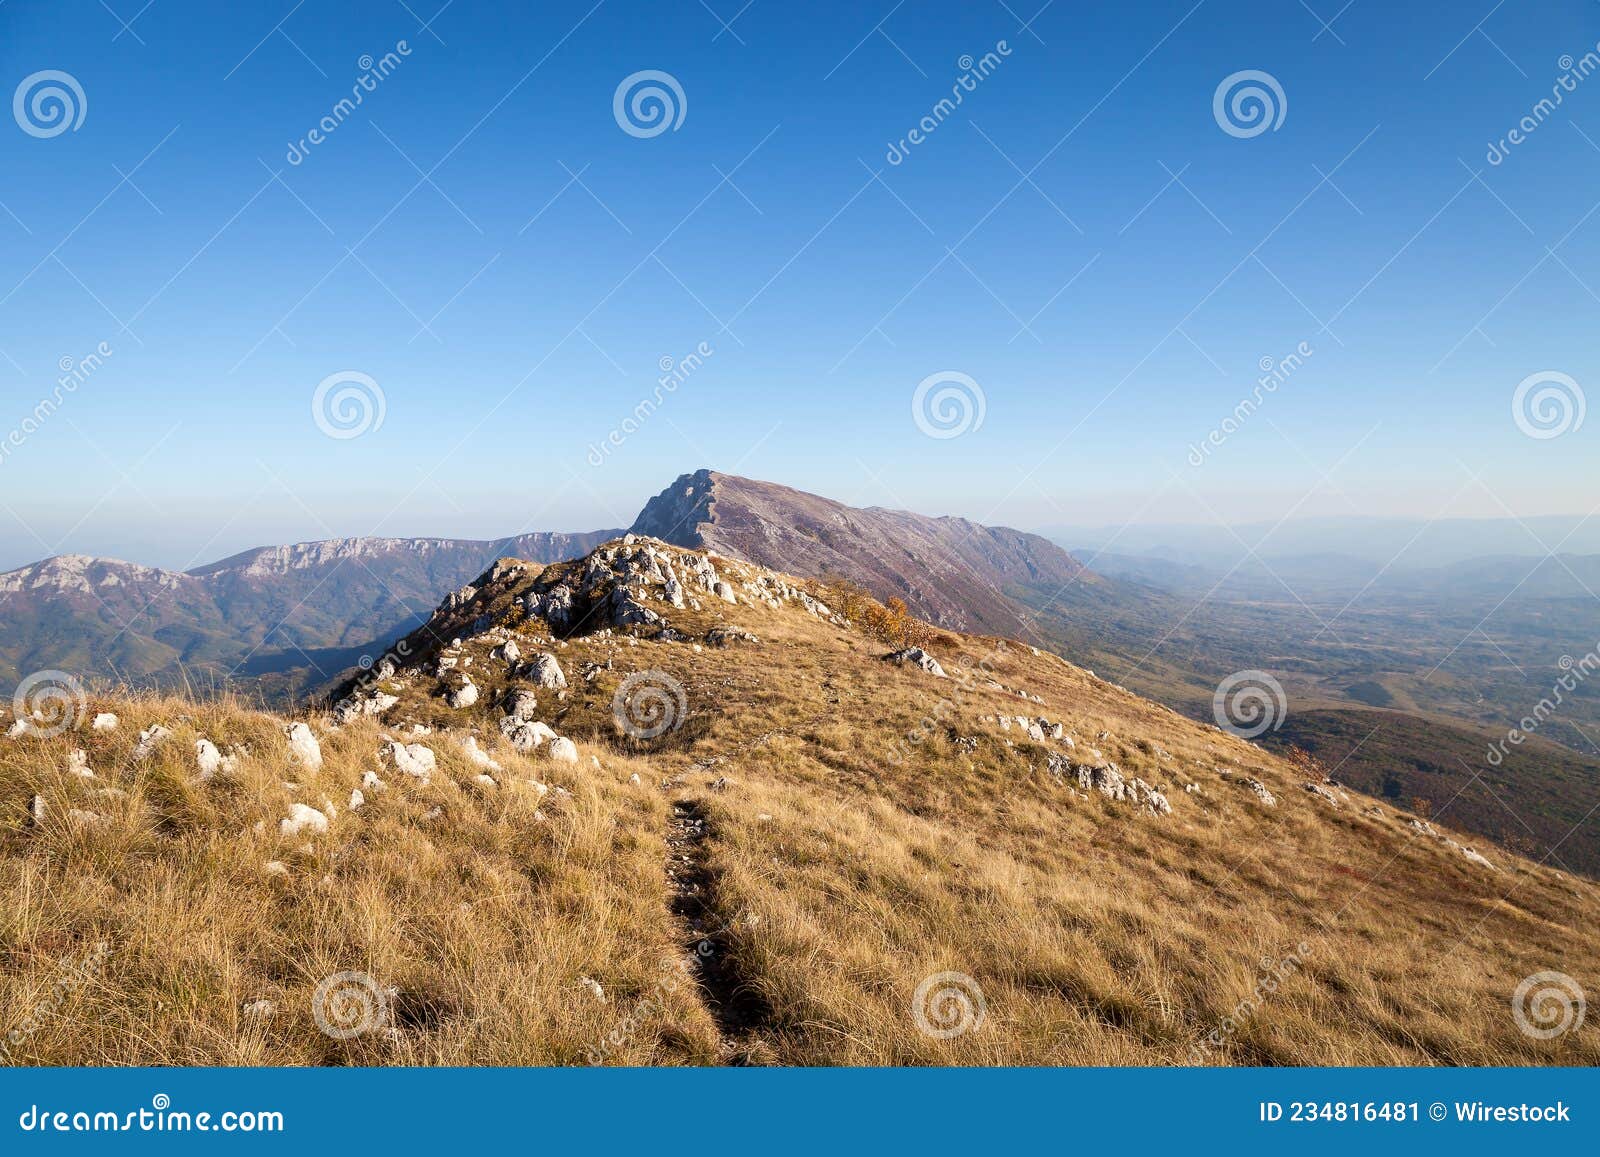 breathtaking autumn view of trem summit on dry mountain (suva planina) in serbia